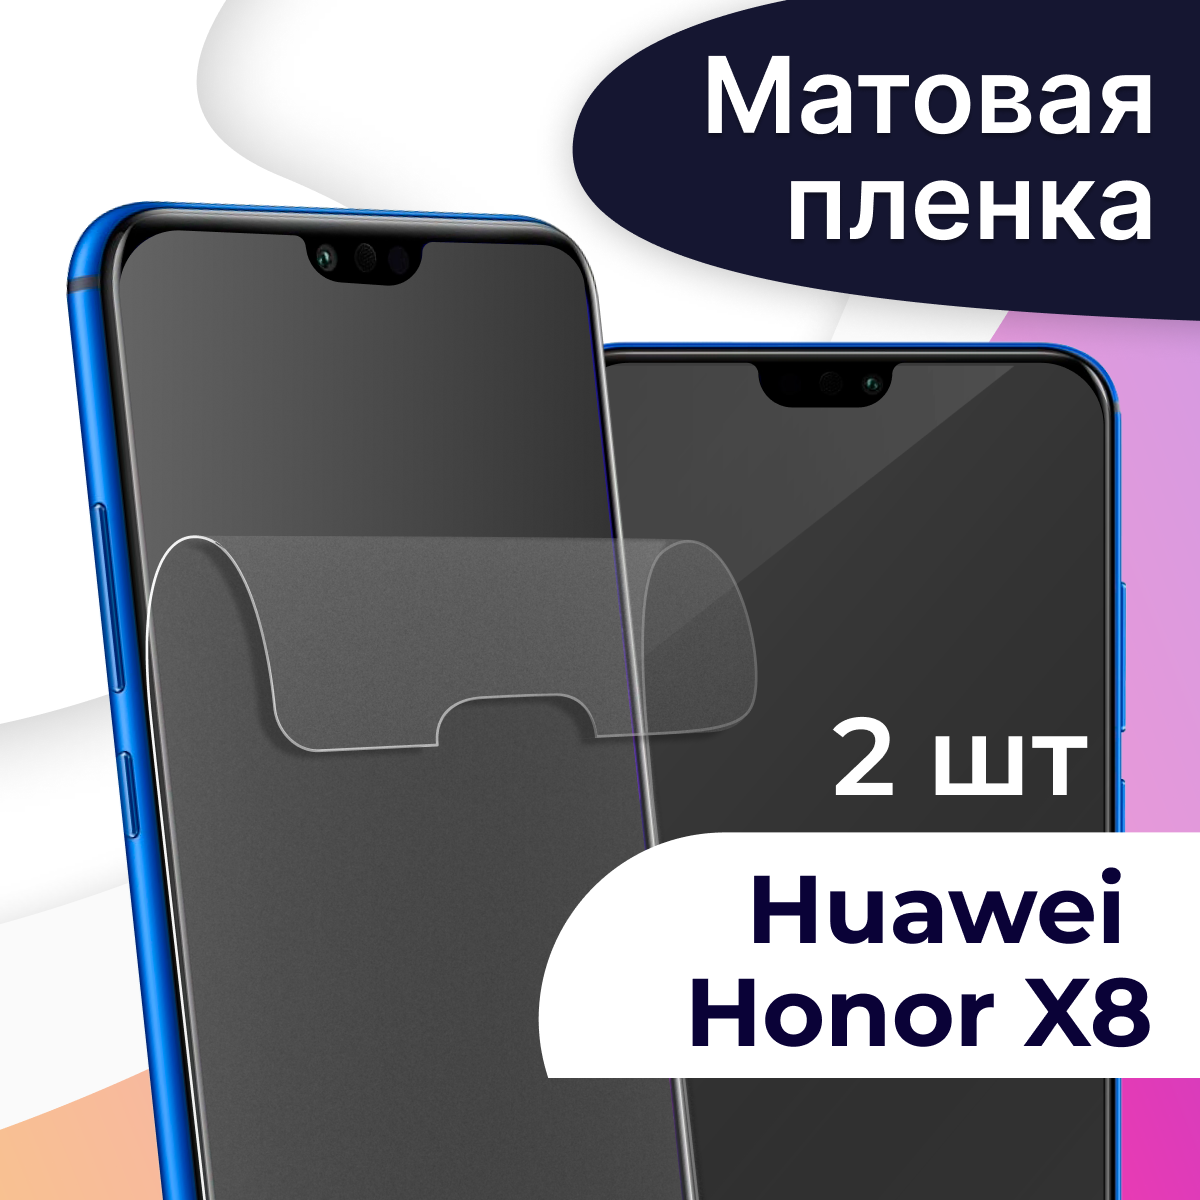 Матовая пленка на телефон Huawei Honor X8 / Гидрогелевая противоударная пленка для смартфона Хуавей Хонор Х8 / Защитная самовосстанавливающаяся пленка